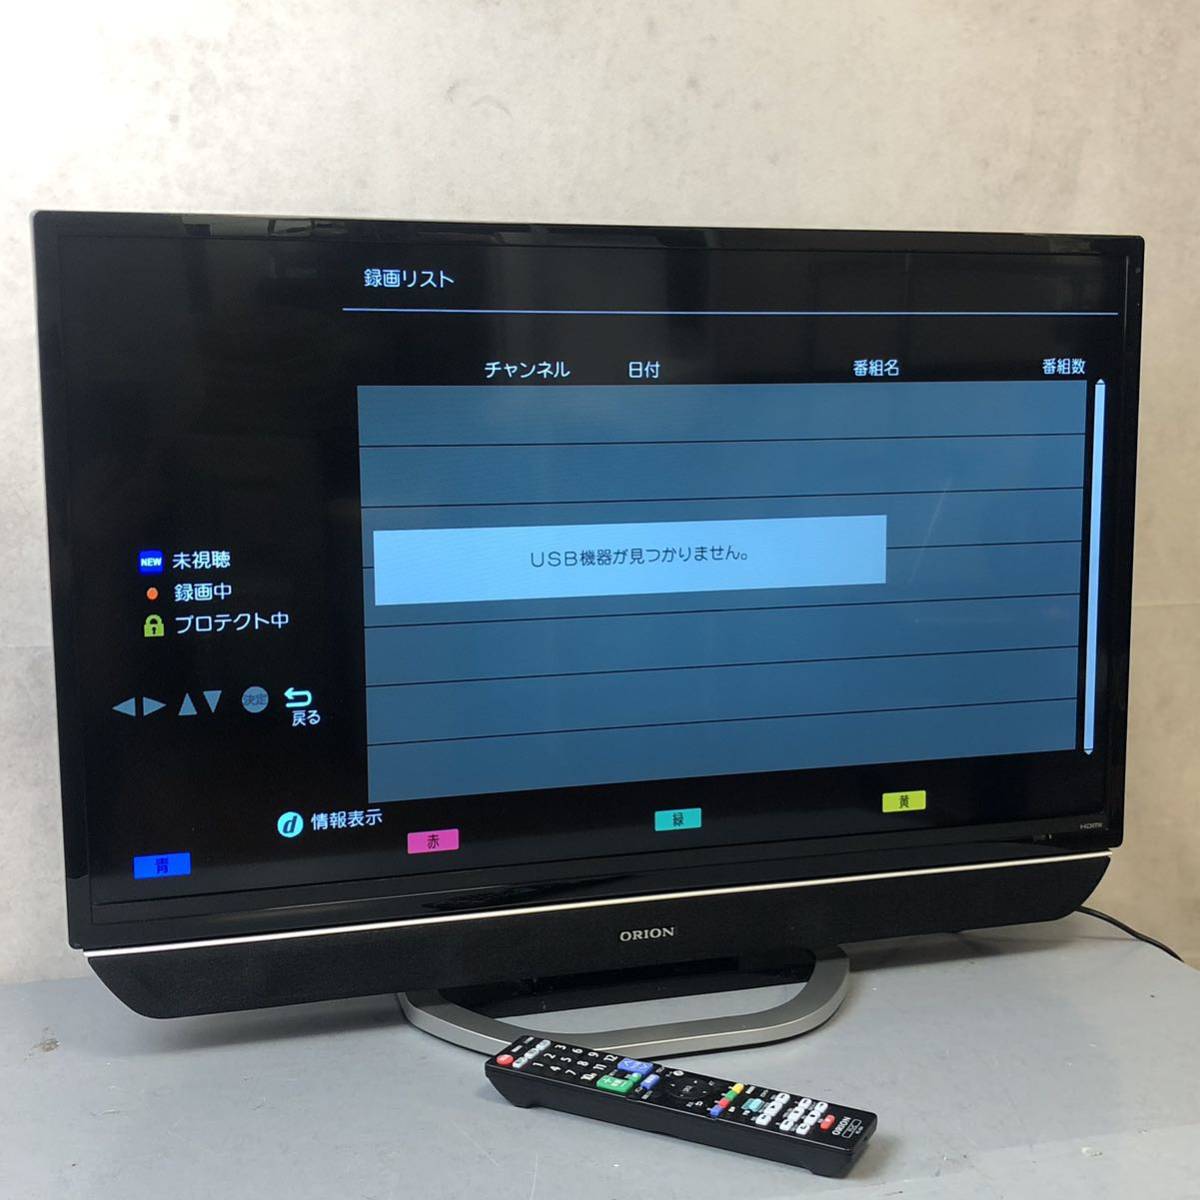 ORION 32型液晶テレビ RN-32SH10(RC-004) TV オリオン液晶カラーテレビ リモコン _画像1